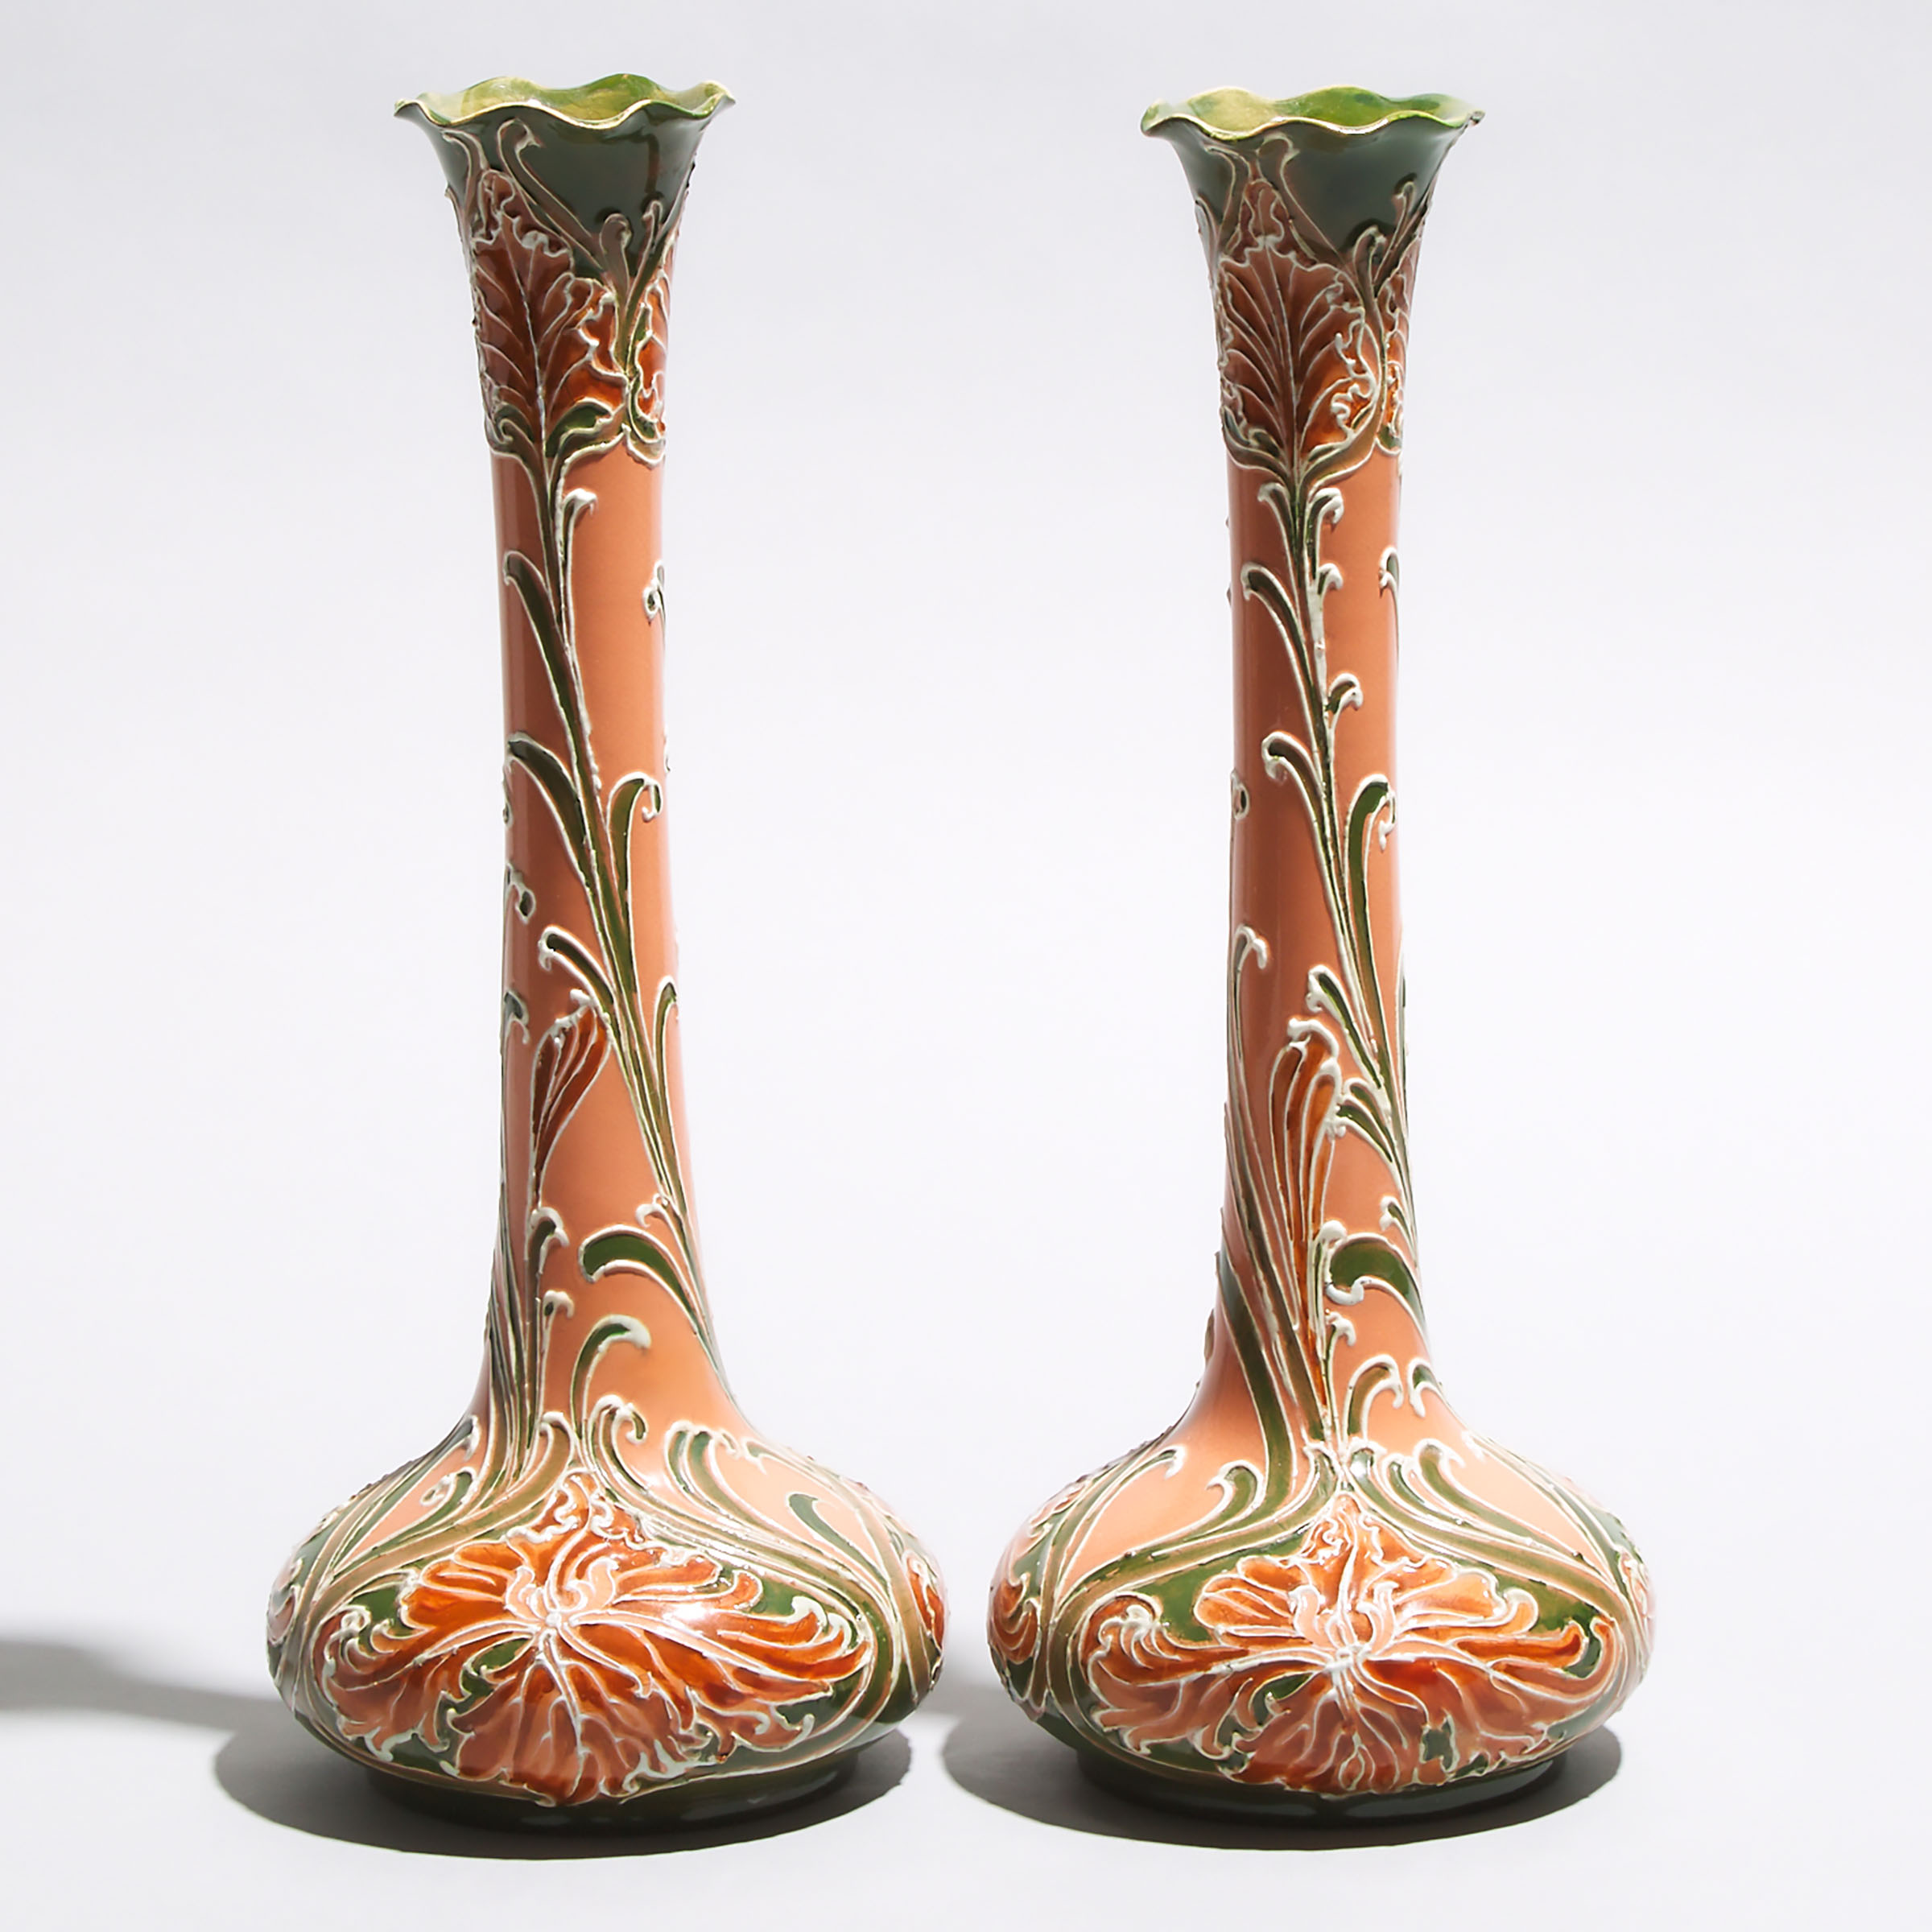 Pair of Macintyre Moorcroft Florian Ware Vases, for Liberty & Co., c.1900